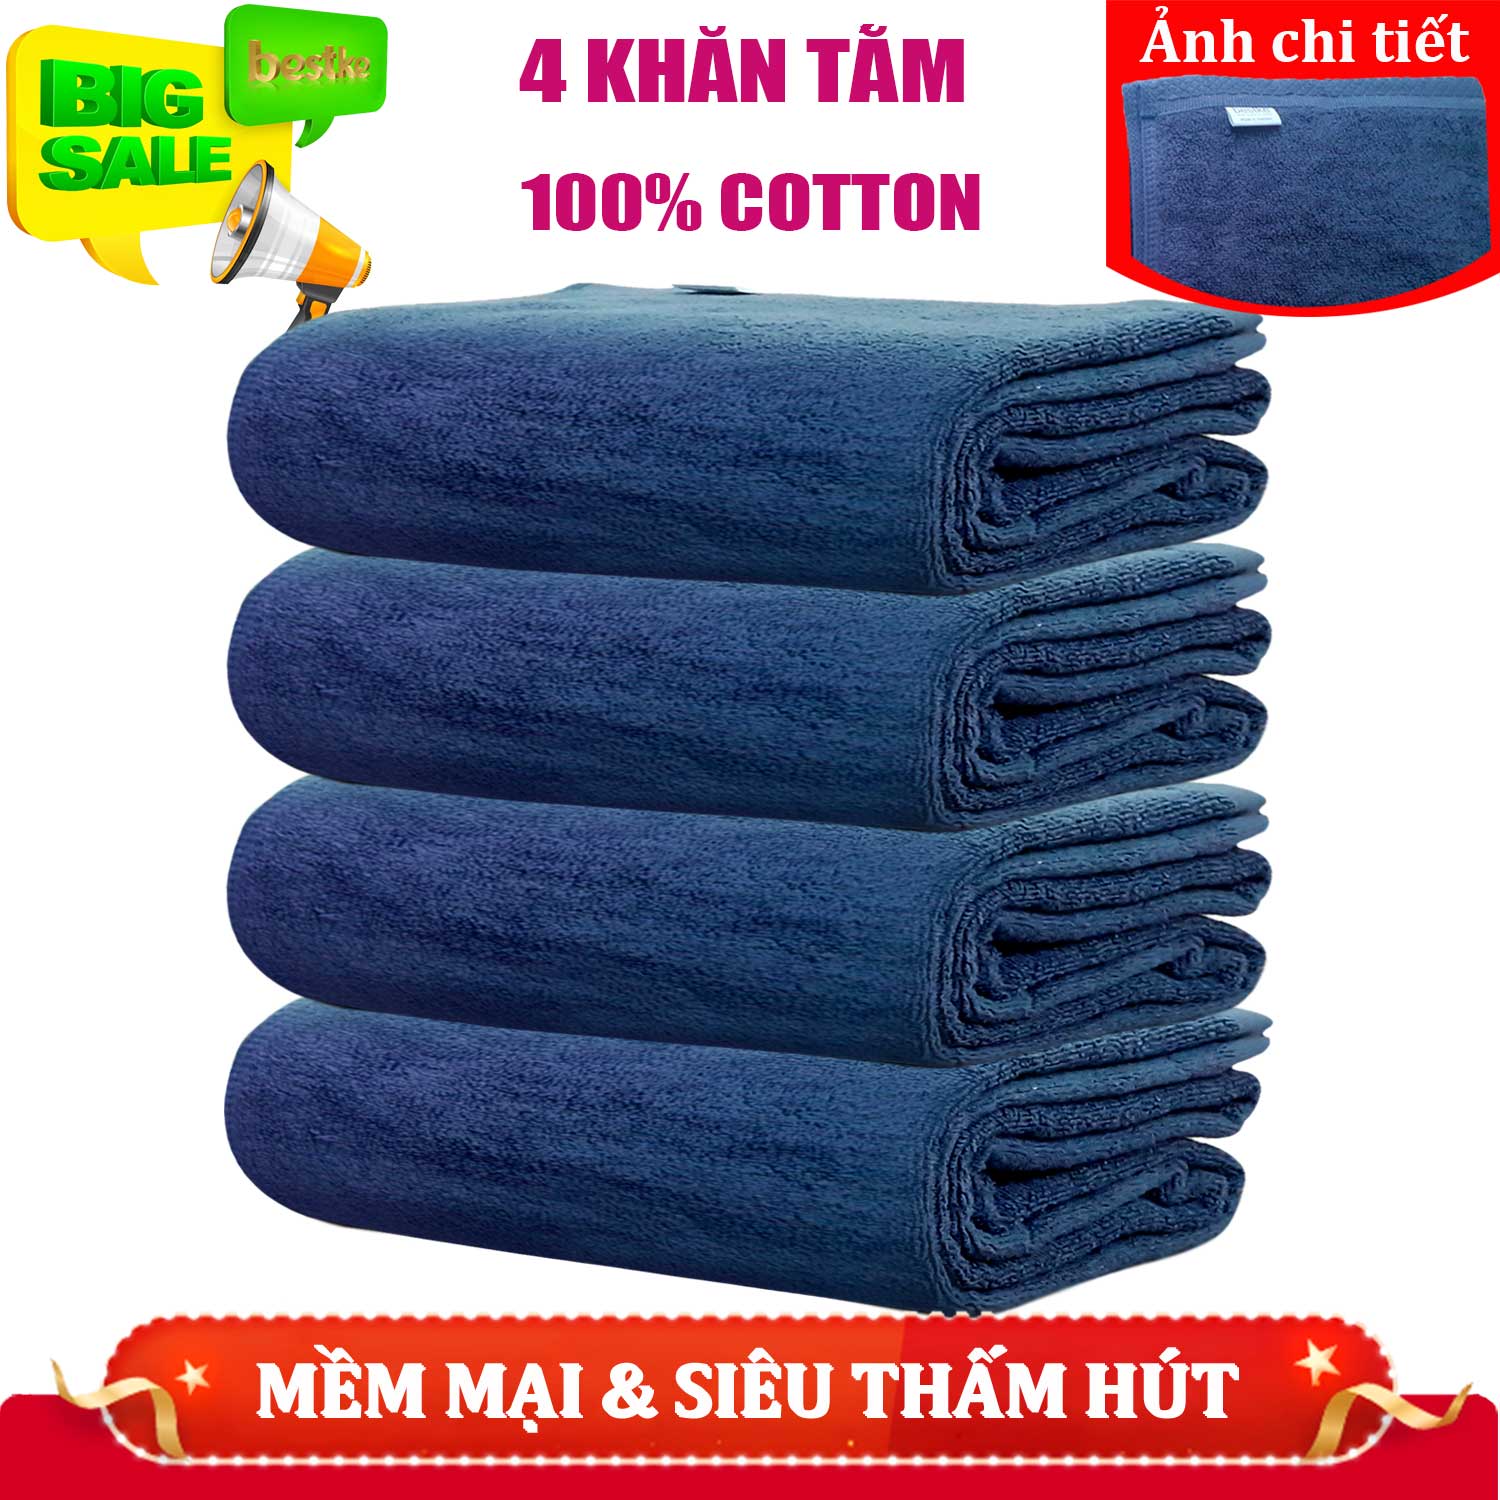 Khăn Tắm bestke 100% Cotton màu xanh đậm, Combo 4 cái 120*60cm = 320g/pcs, towels manufacturer